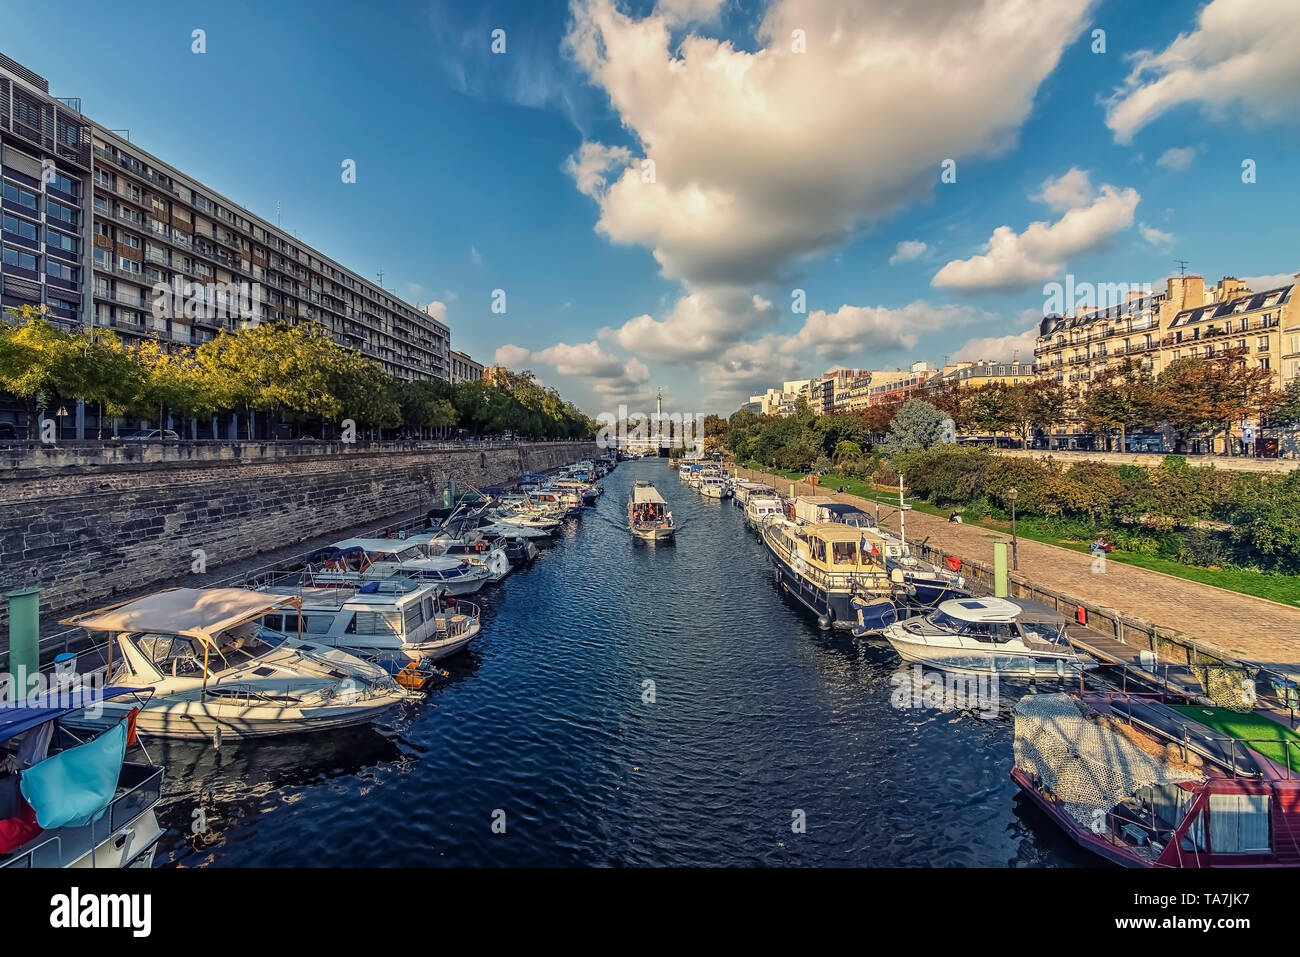 Bassin de l'Arsenal in Paris Stock Photo